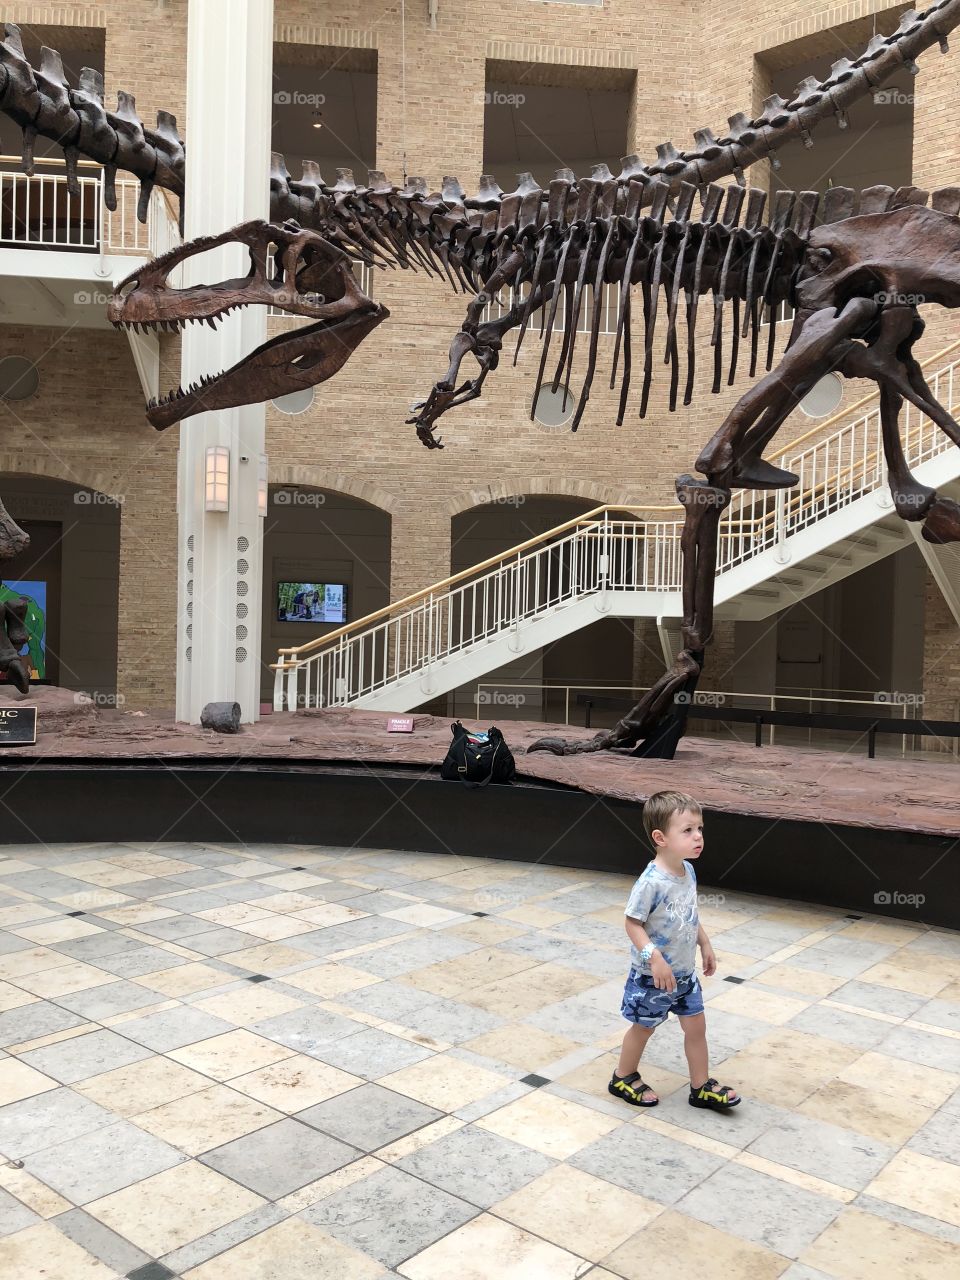 Child walking in museum near dinosaur